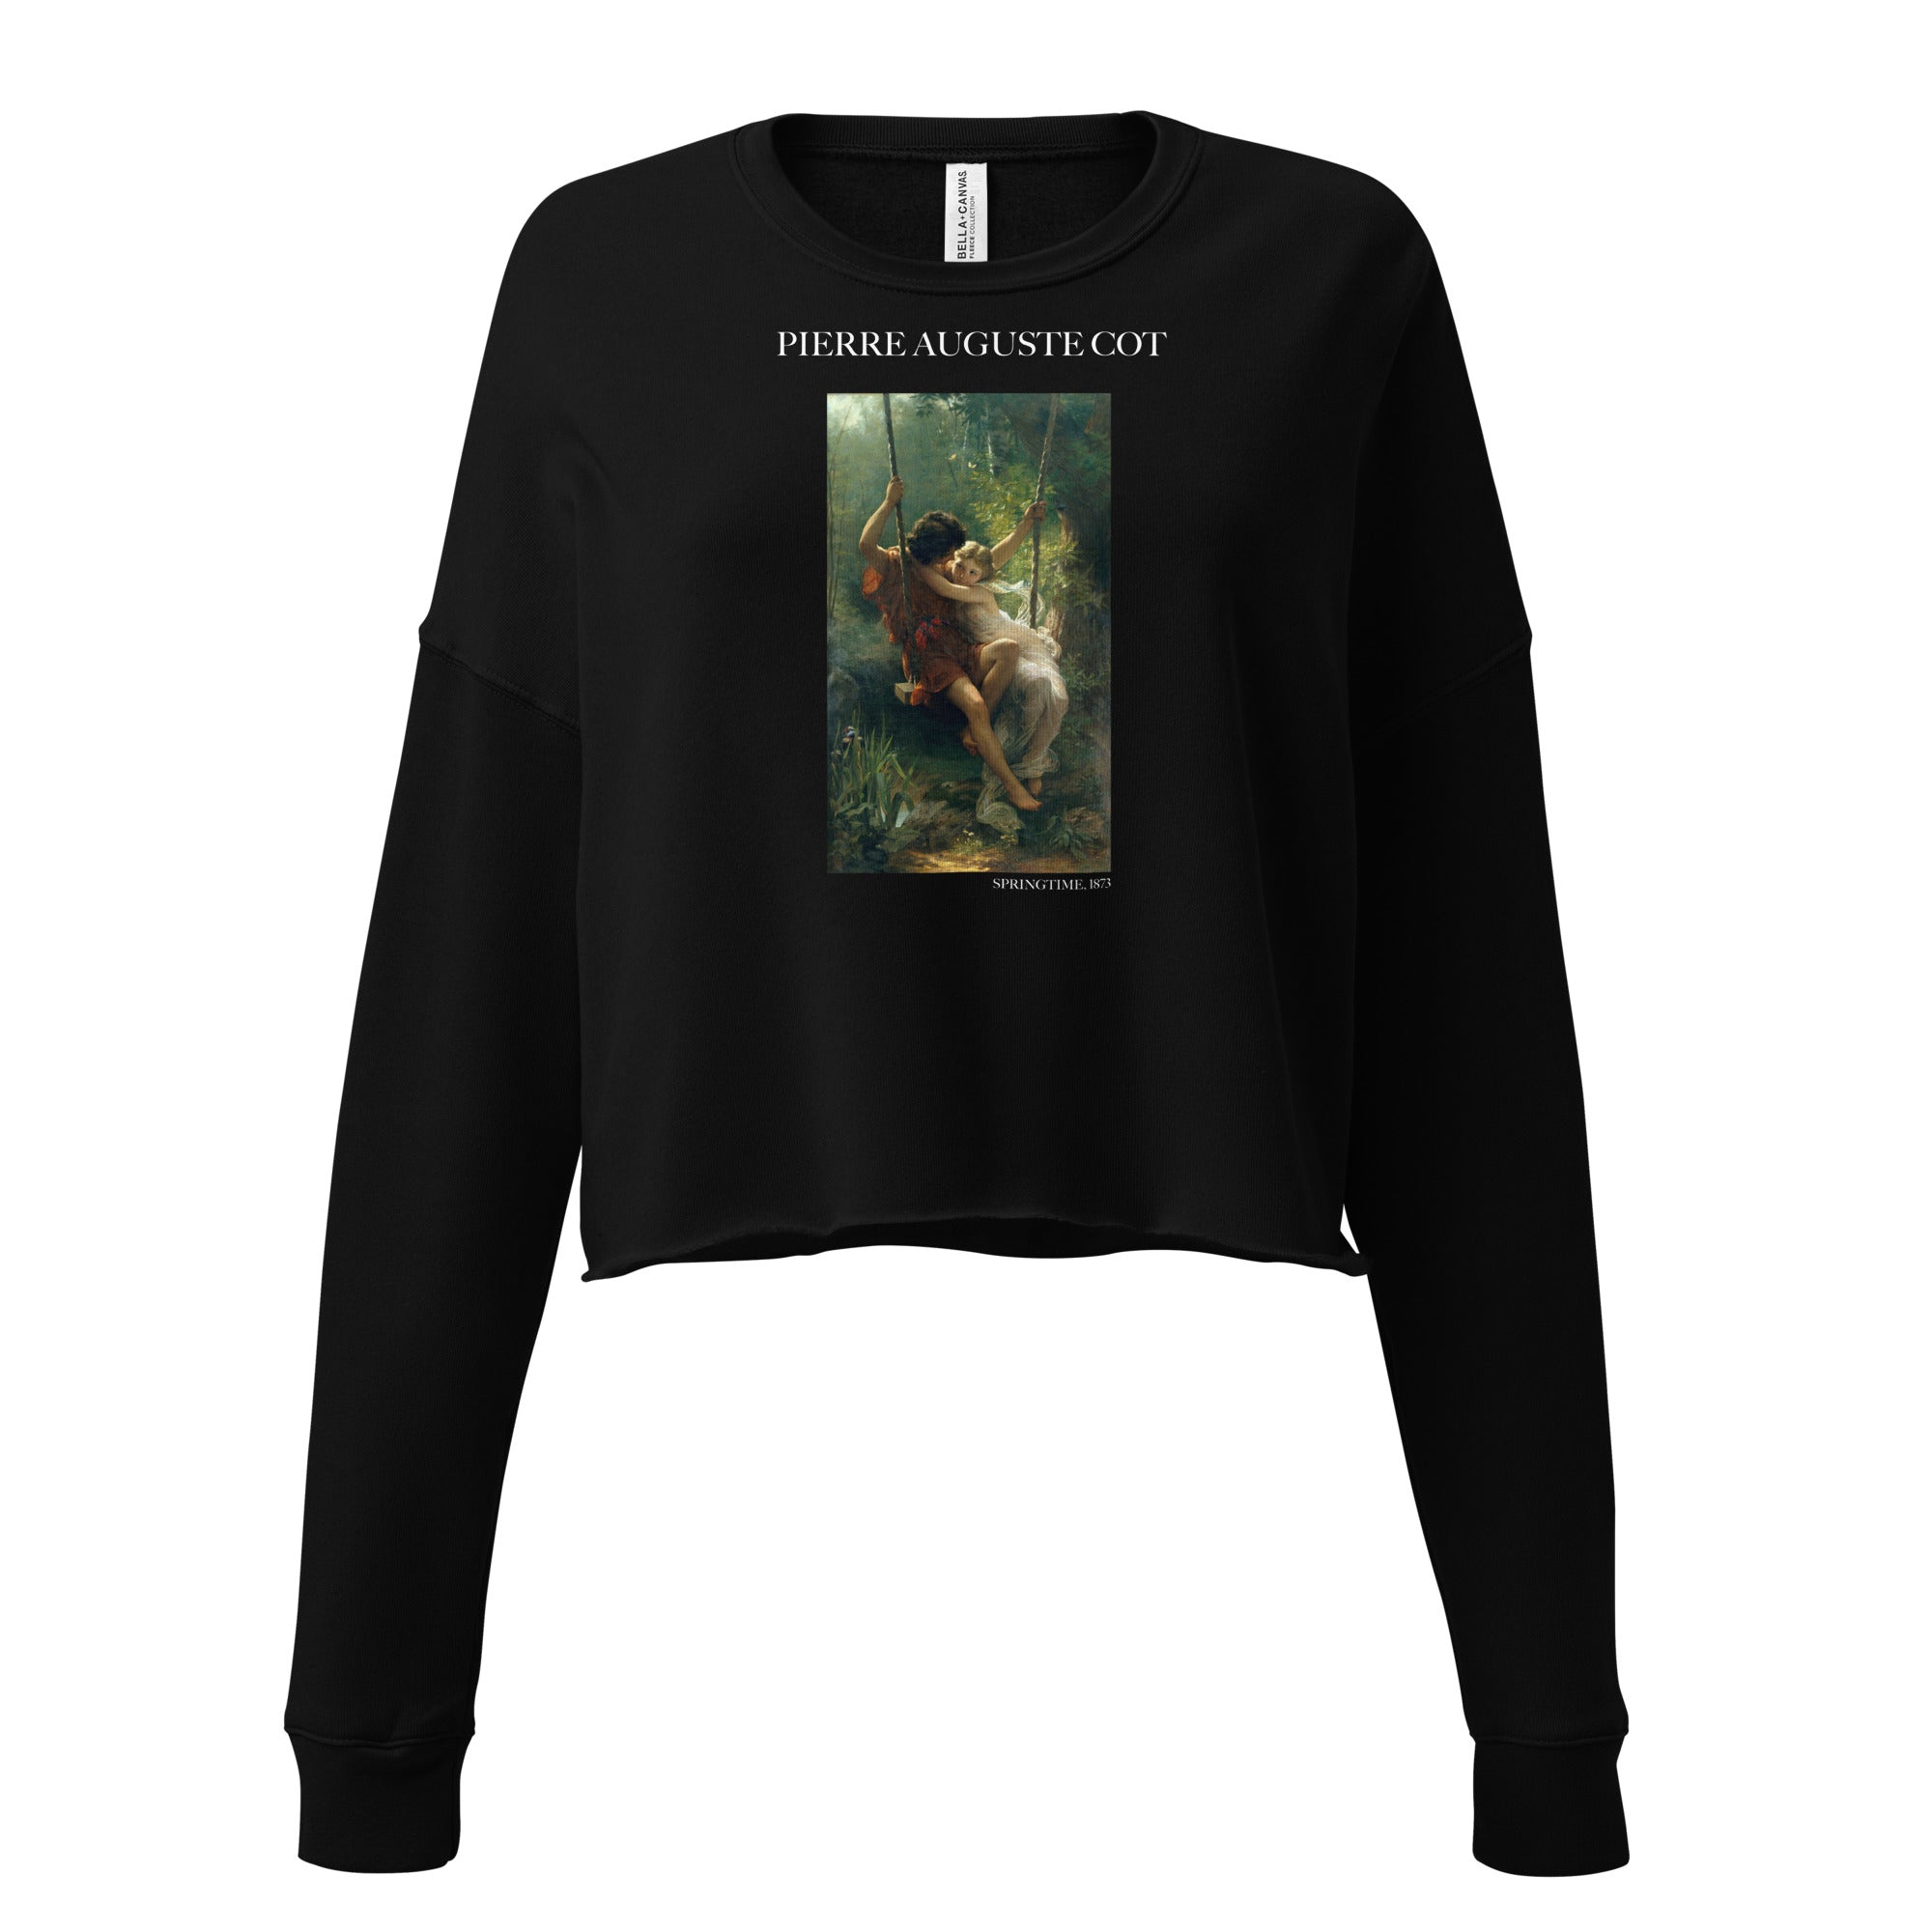 Pierre Auguste Cot 'Frühling' Berühmtes Gemälde Kurzes Sweatshirt | Premium Art Kurzes Sweatshirt